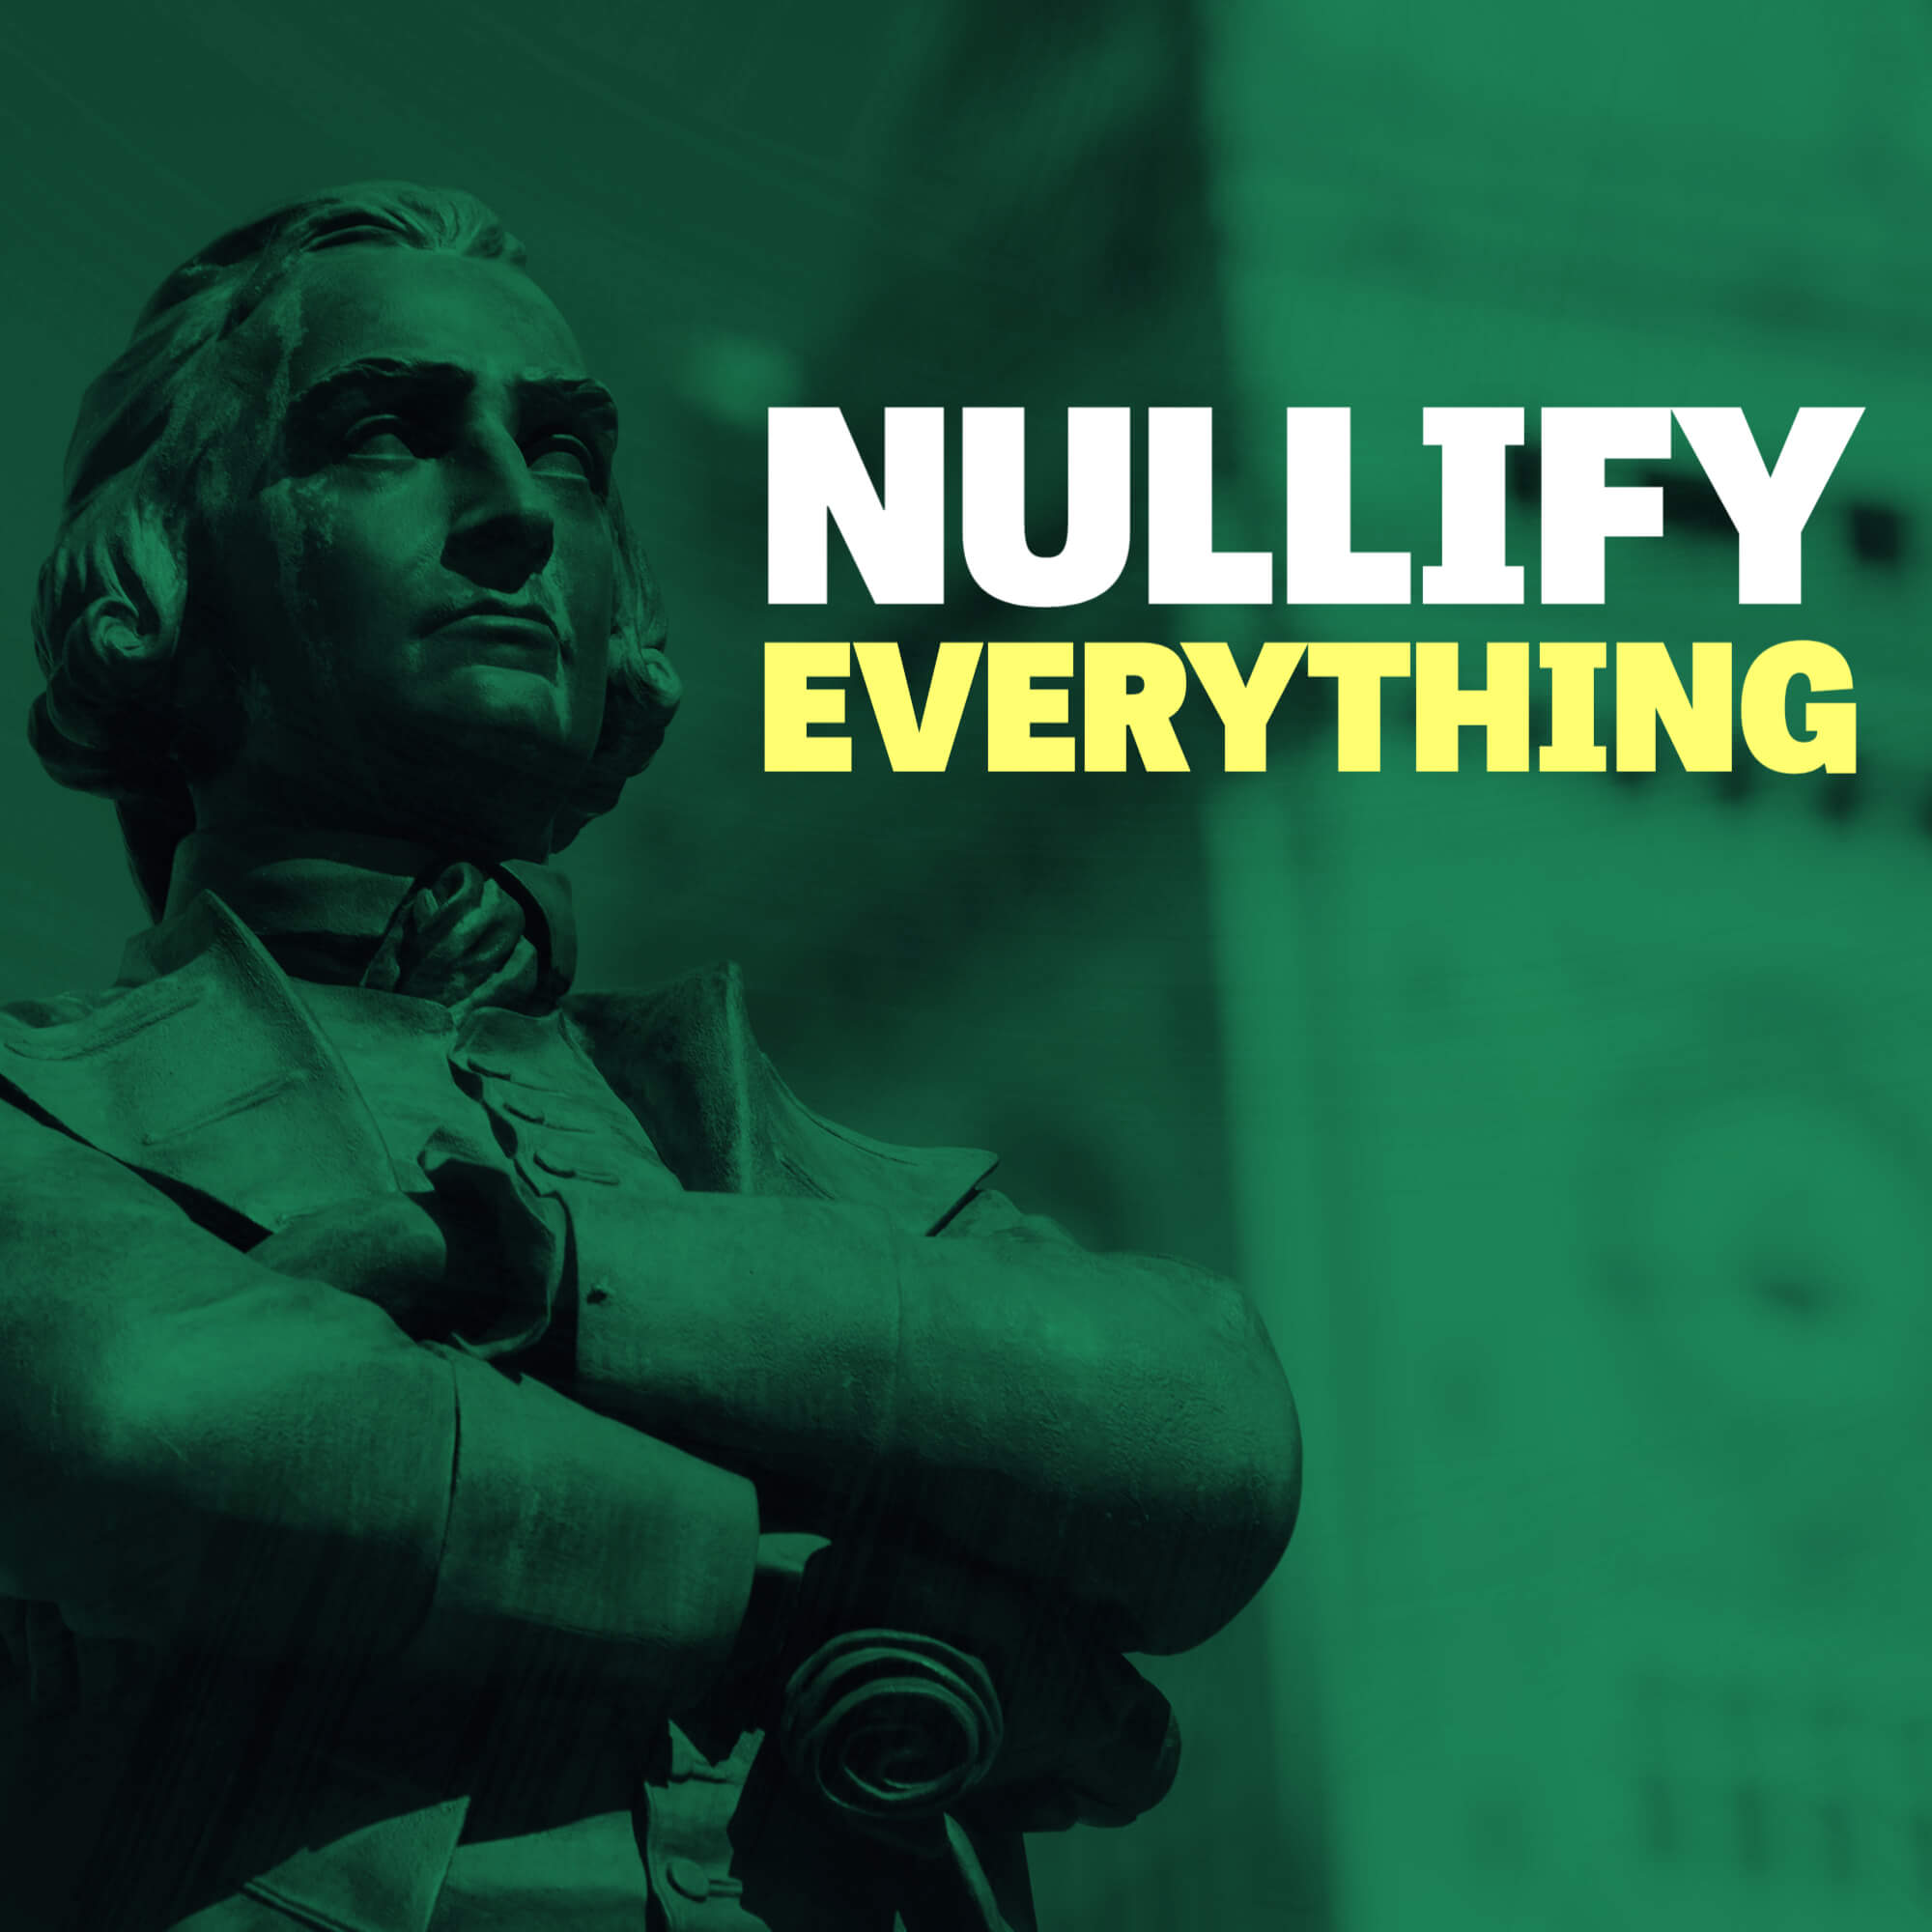 Nullify Everything! NMN Ep 10